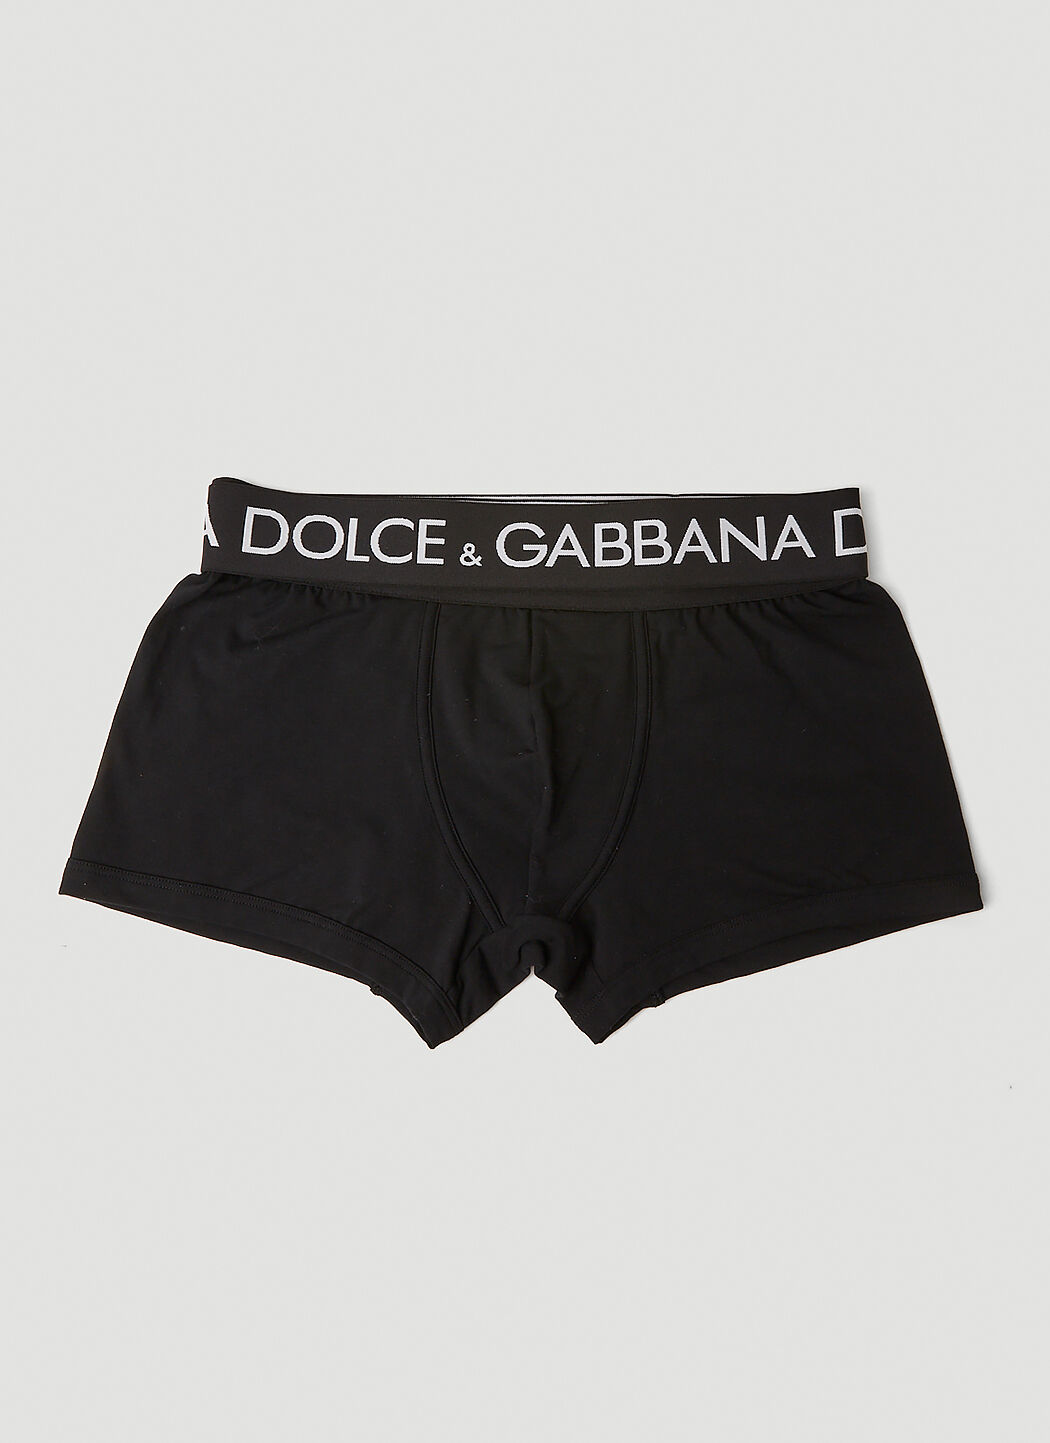 Dolce & Gabbana 徽标裤腰平角内裤 Black dol0156003